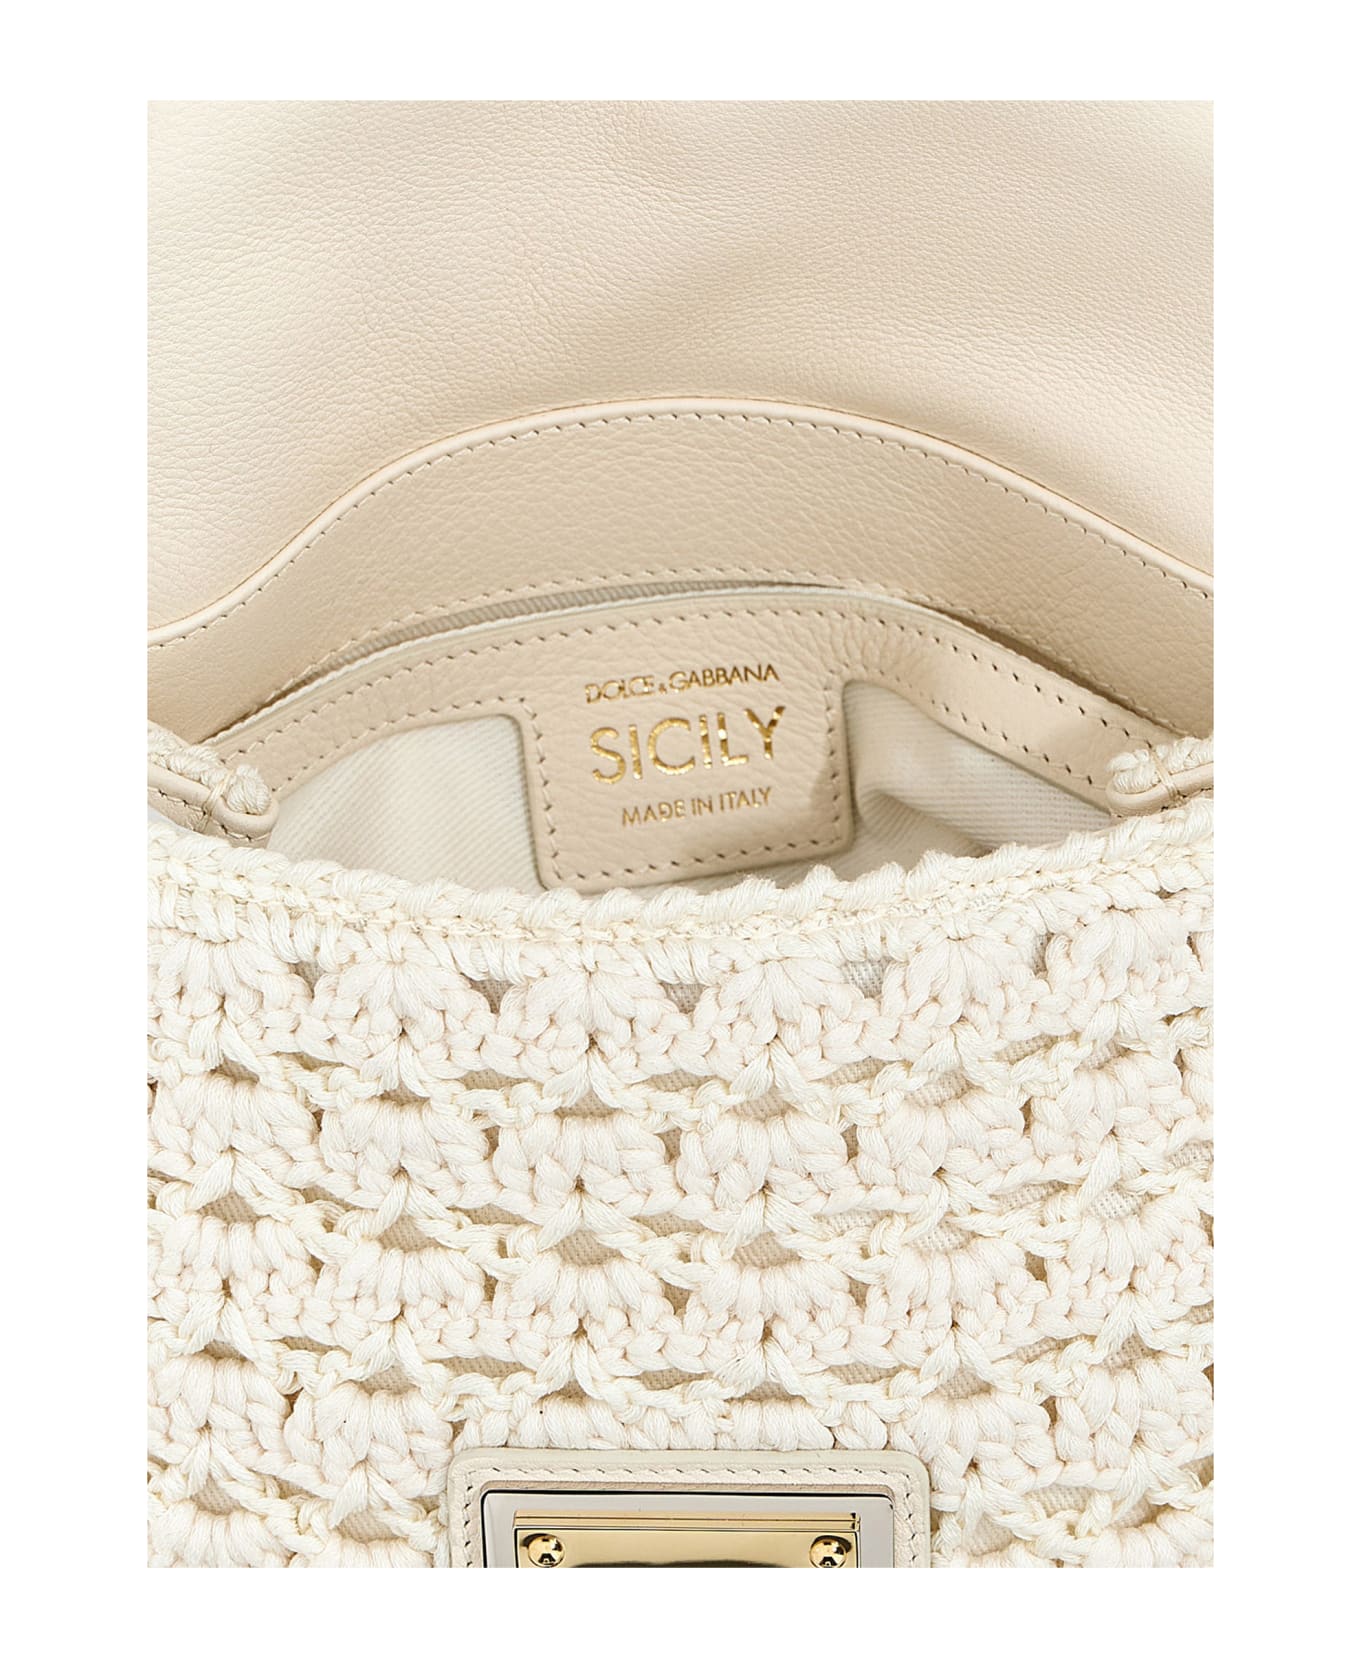 Dolce & Gabbana Crochet Handbag - White